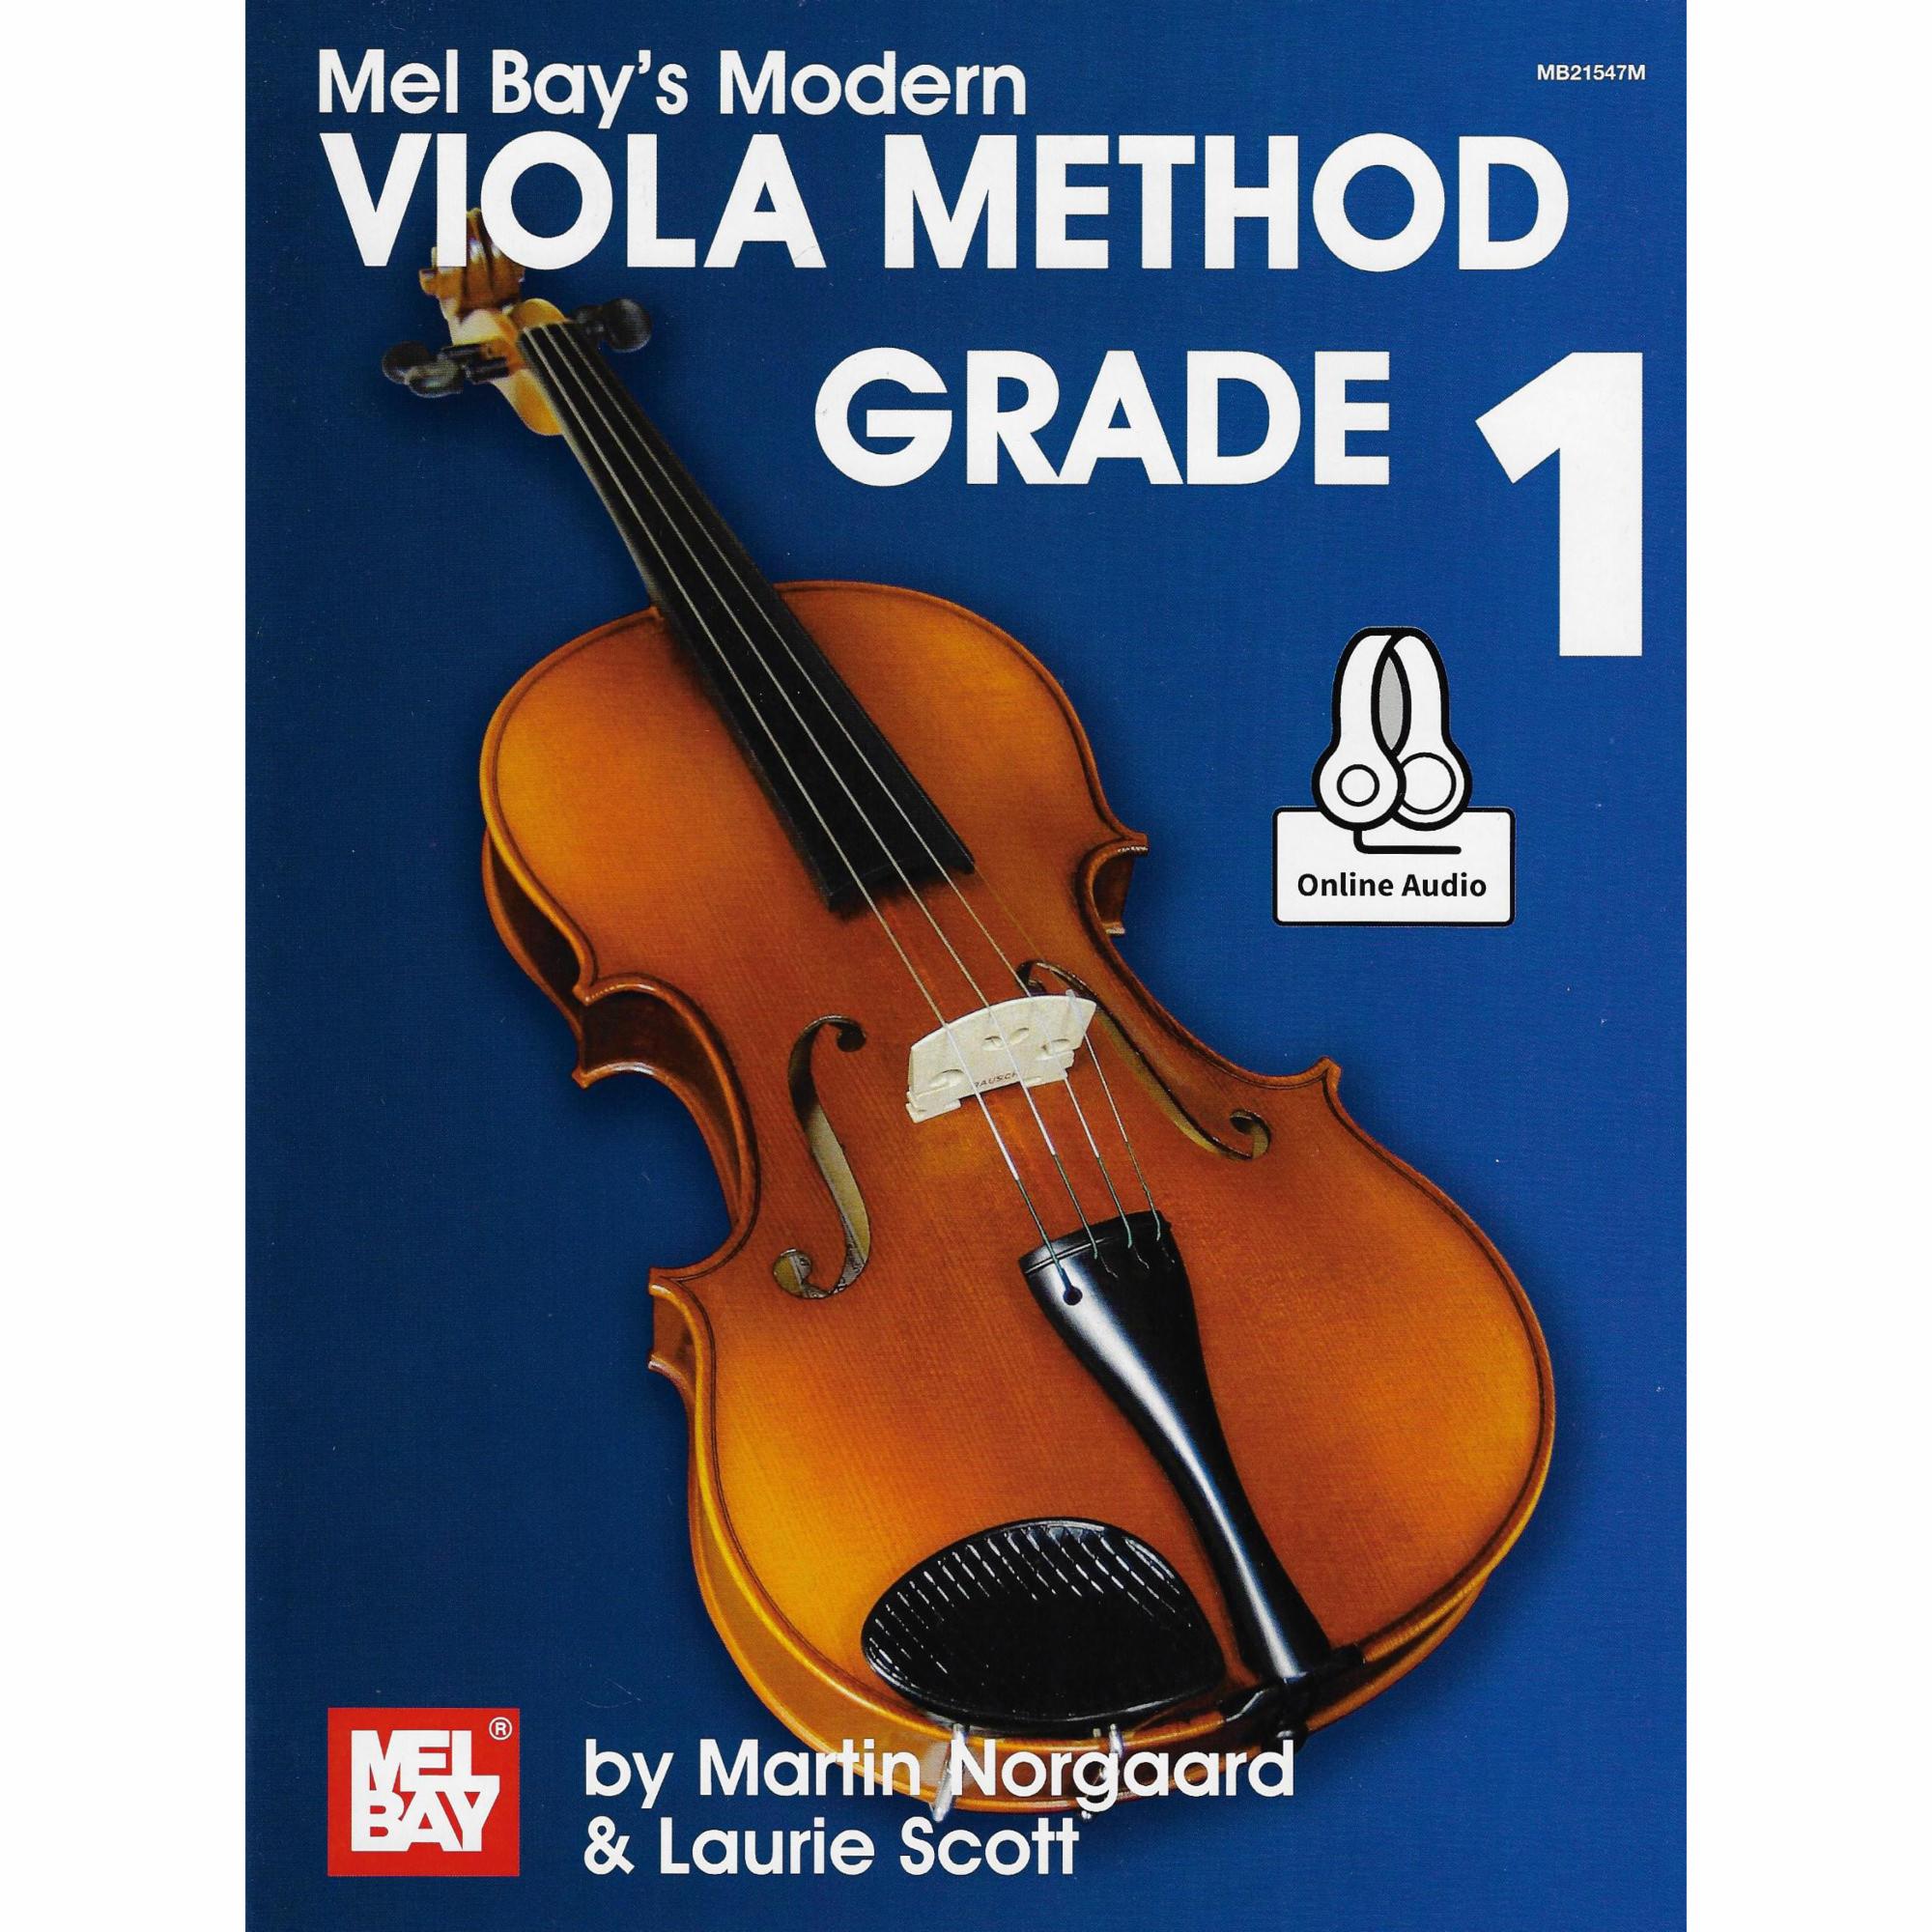 Mel Bay's Modern Viola Method, Grade 1